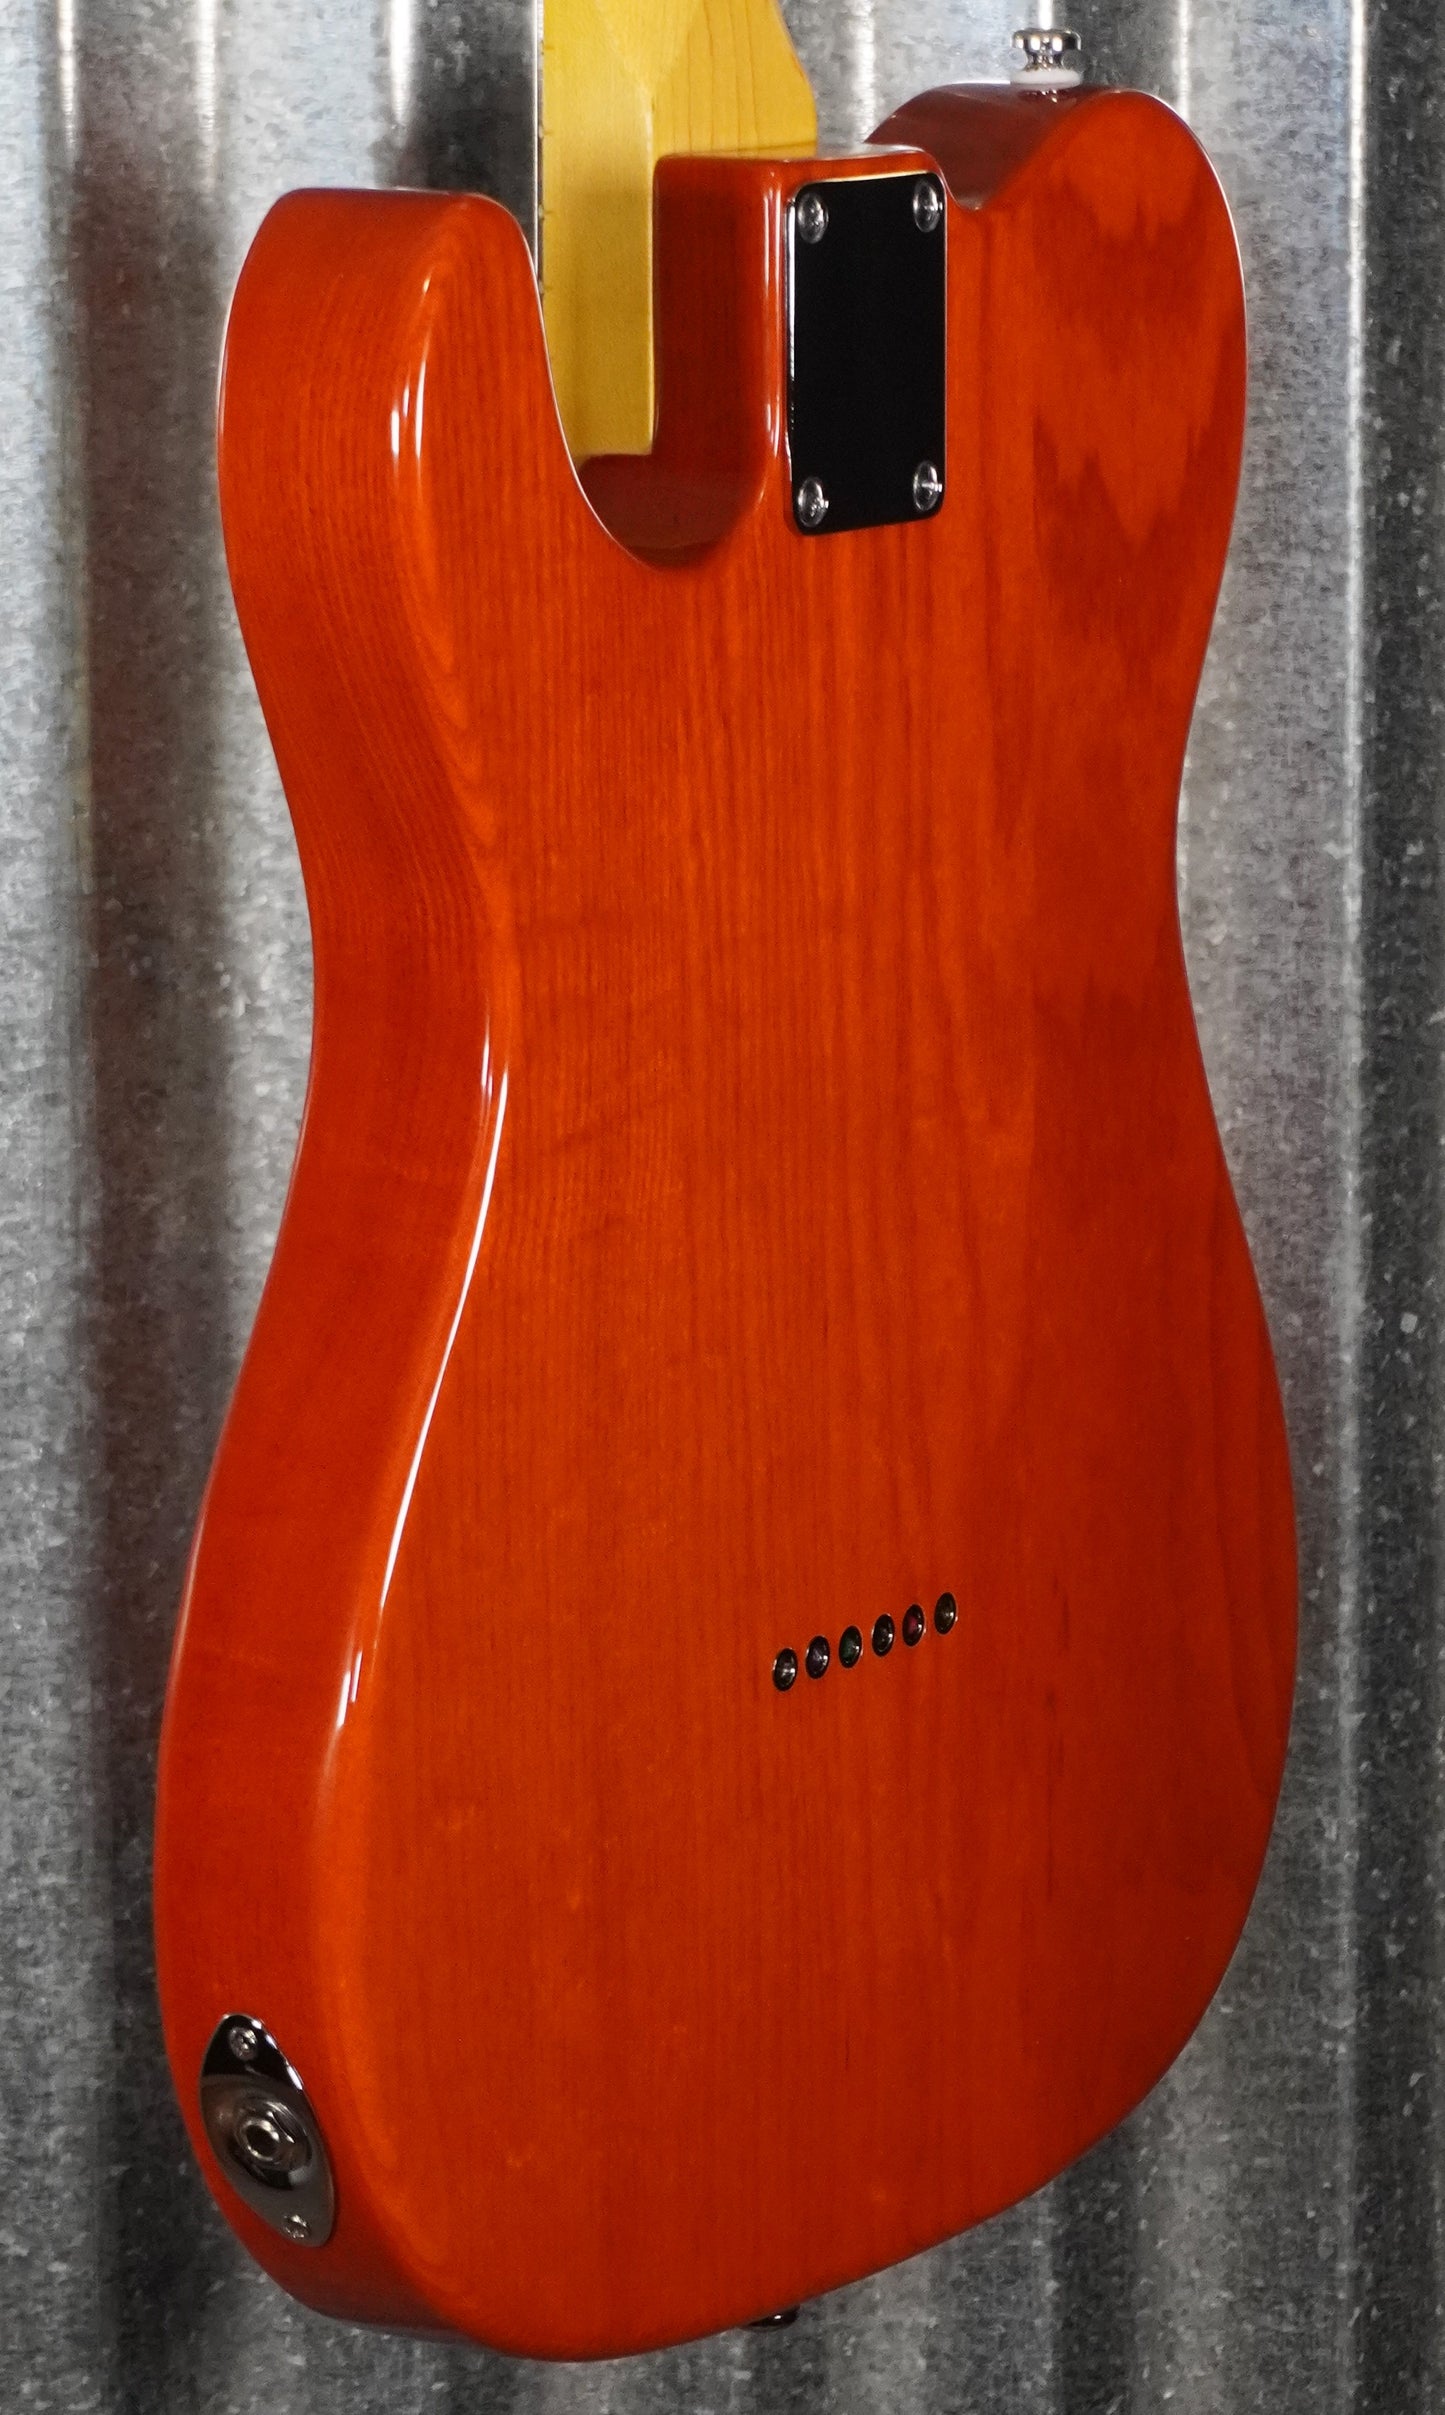 G&L Tribute ASAT Classic Bluesboy Clear Orange Semi Hollow Guitar #0435